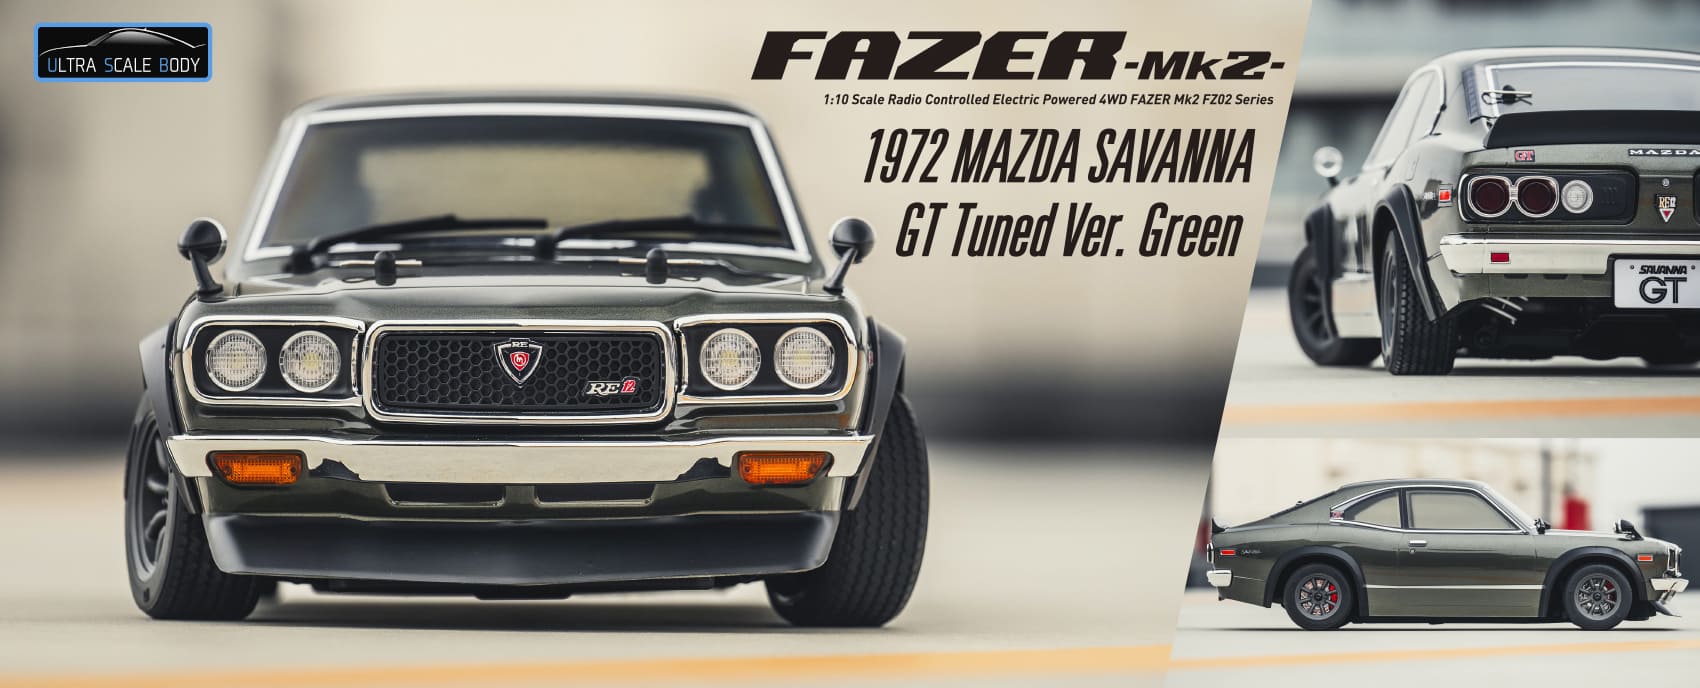 1/10 EP 4WD フェーザーMk2 FZ02 レディセット 1972 マツダ サバンナ GT チューンド・バージョン